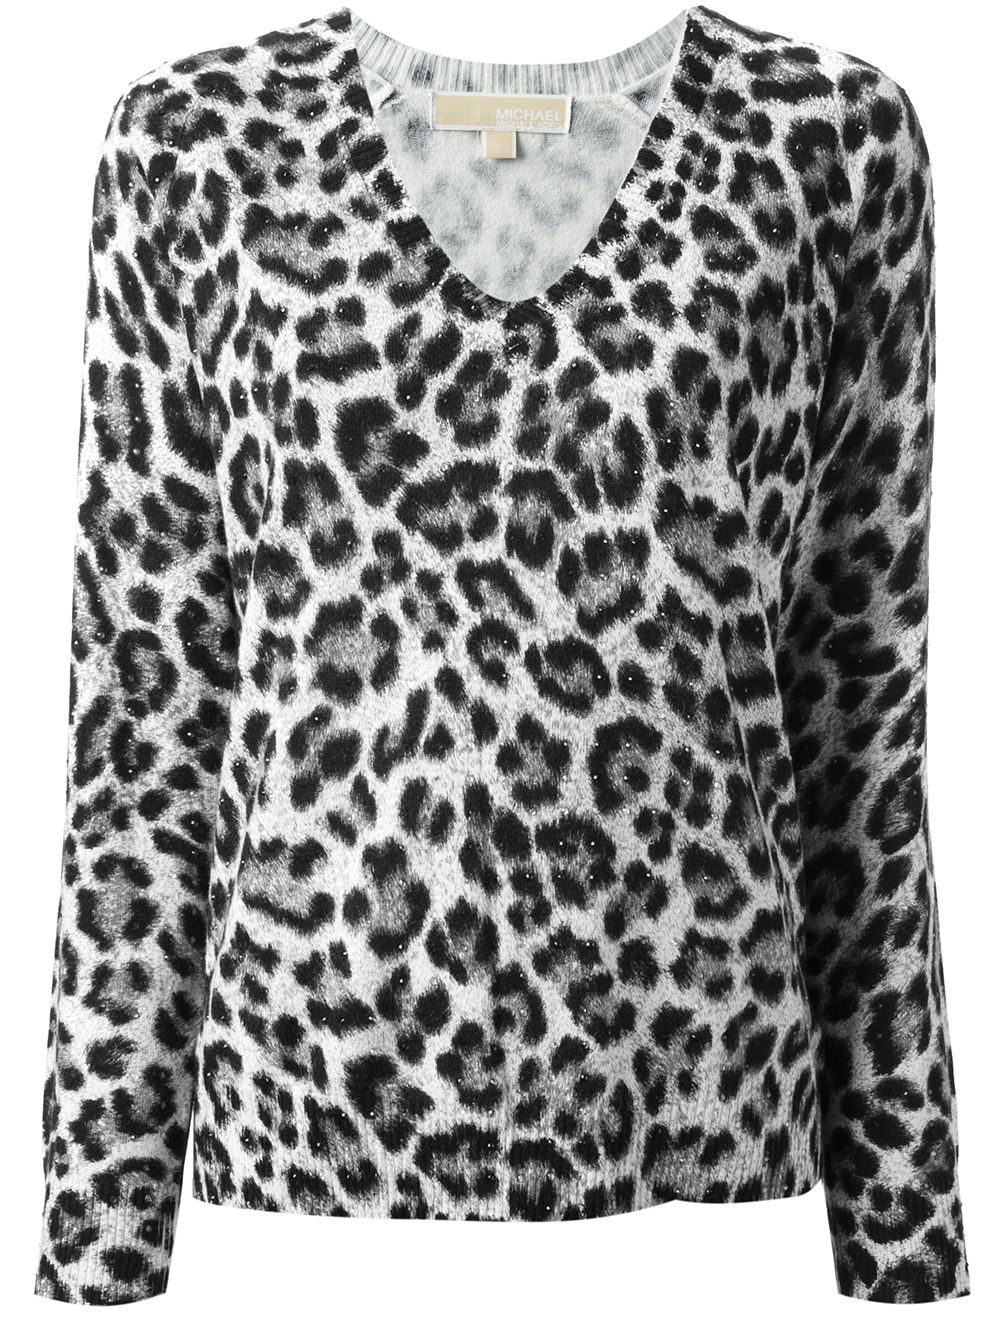 MICHAEL Michael Kors Leopard Print Sweater in Black